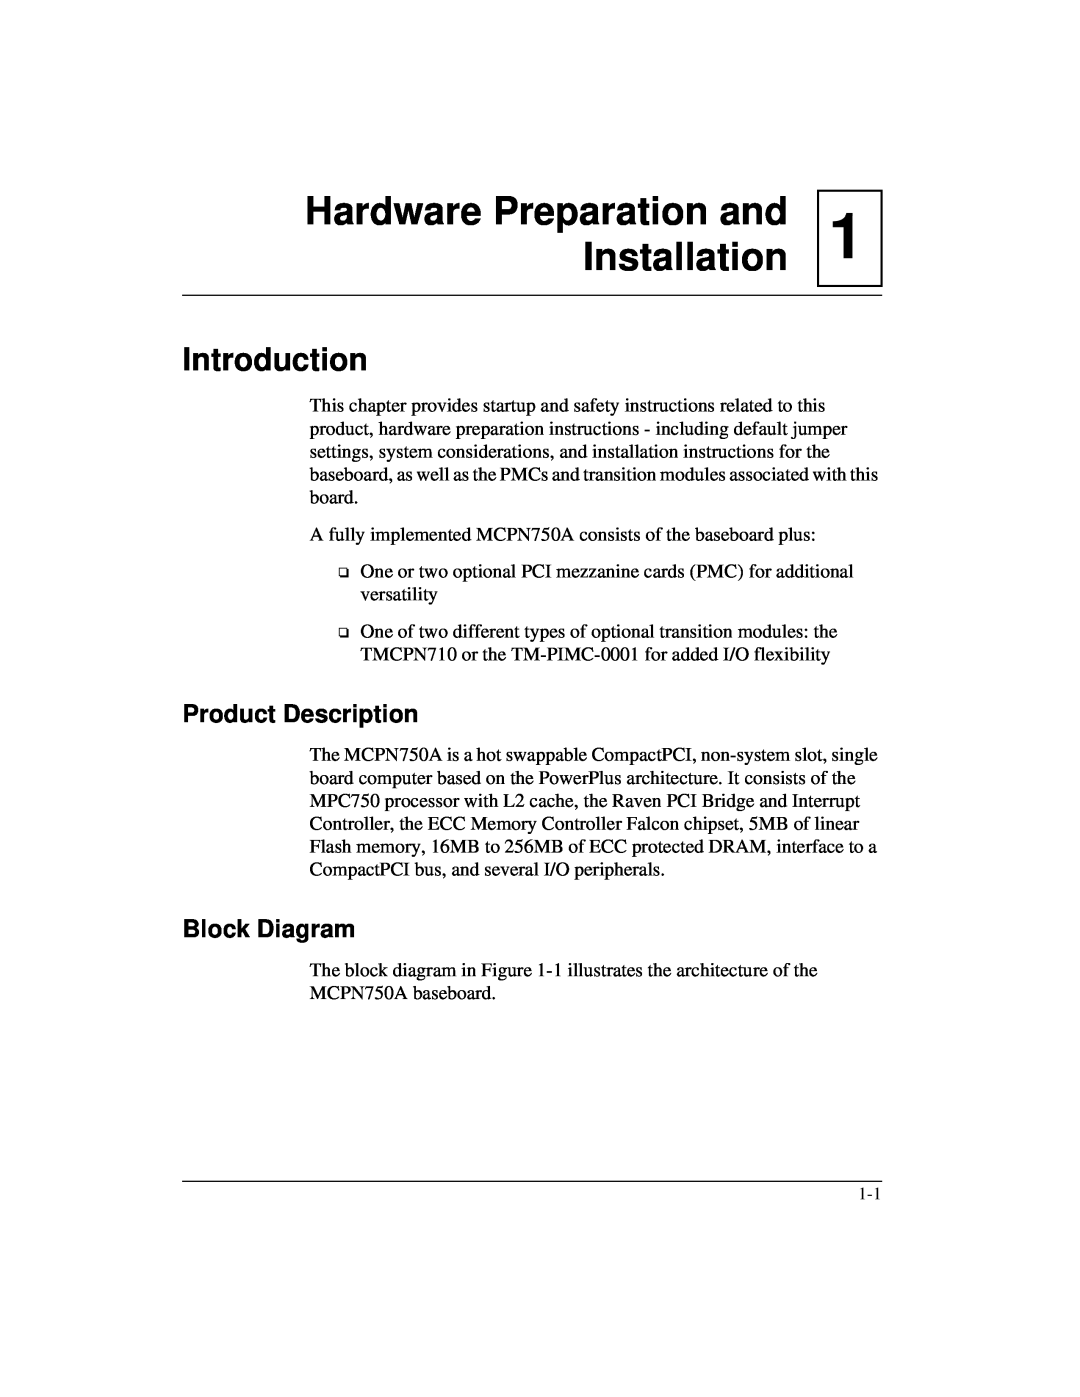 Motorola IH5, MCPN750A manual Hardware Preparation and Installation, Introduction, Product Description, Block Diagram 